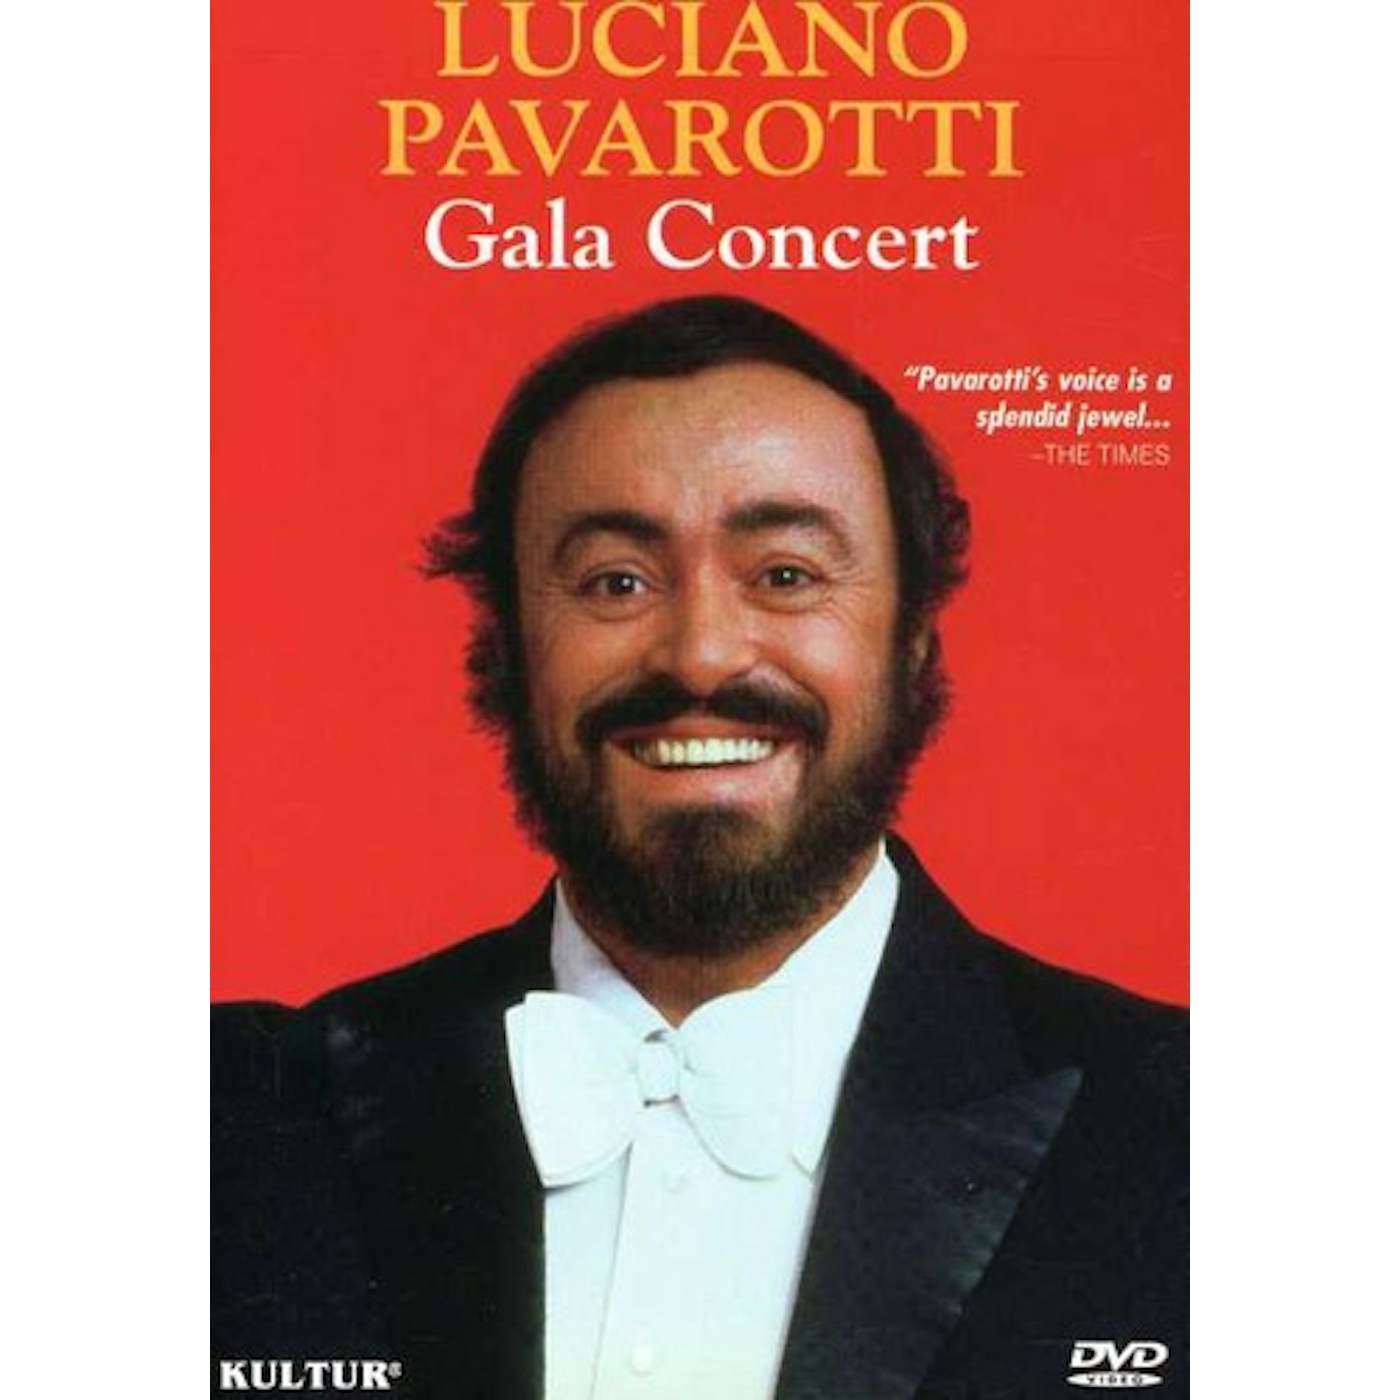 Luciano Pavarotti GALA CONCERT DVD